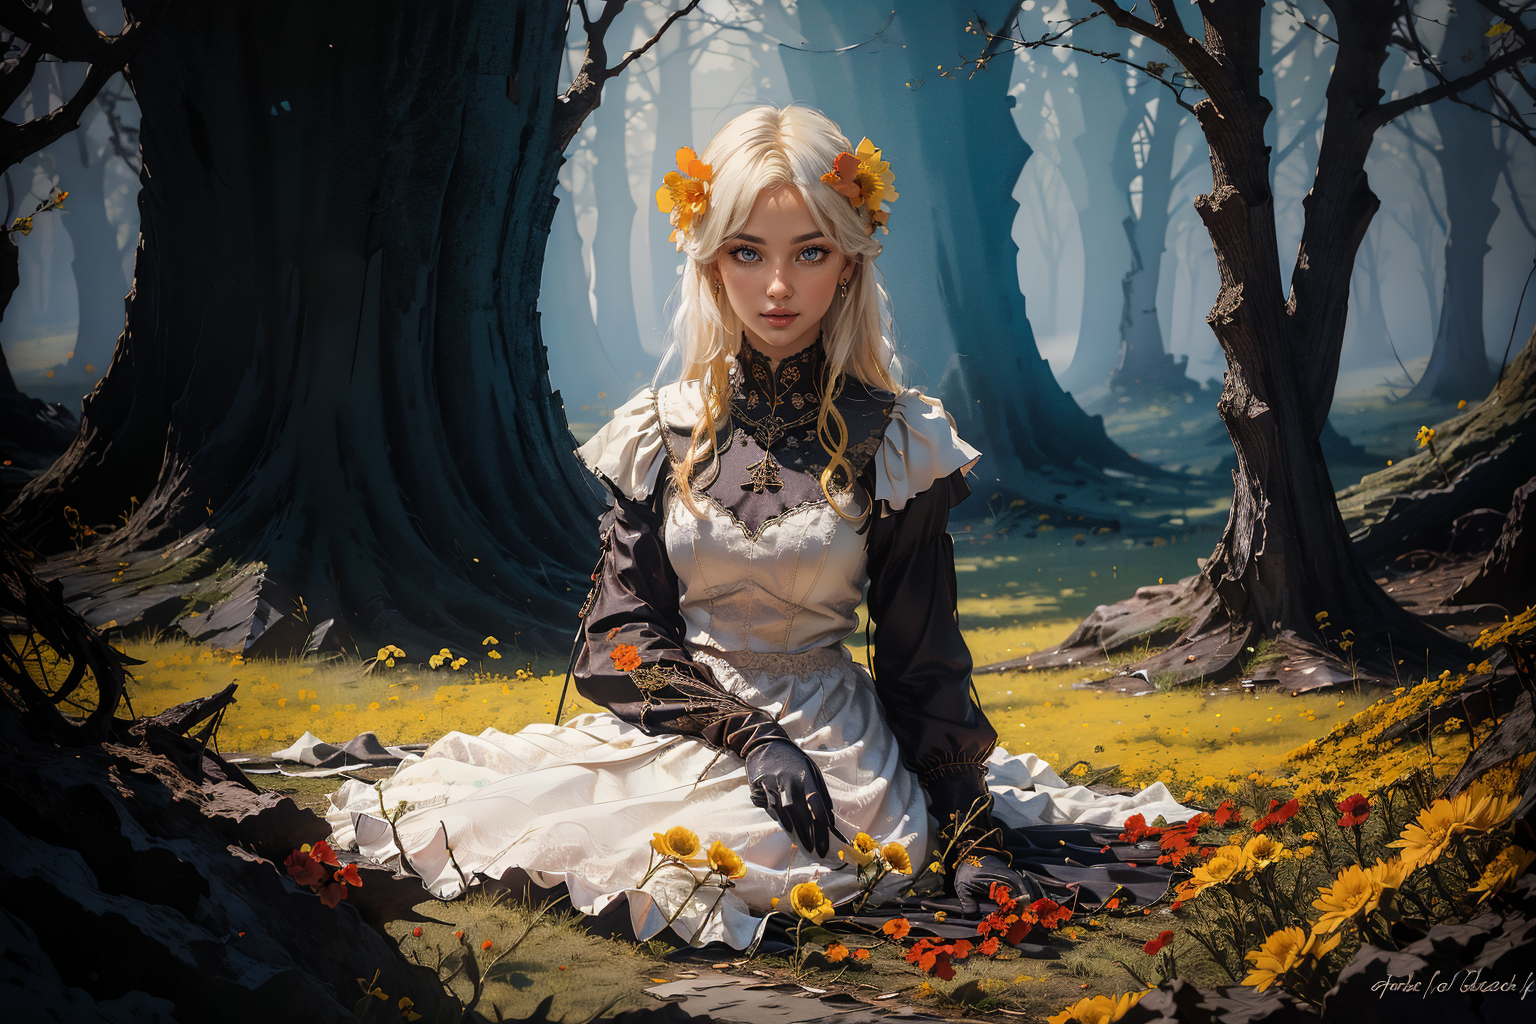 General 1536x1024 AI art digital art white dress blonde forest wood fantasy painting Fantasy princess gloves